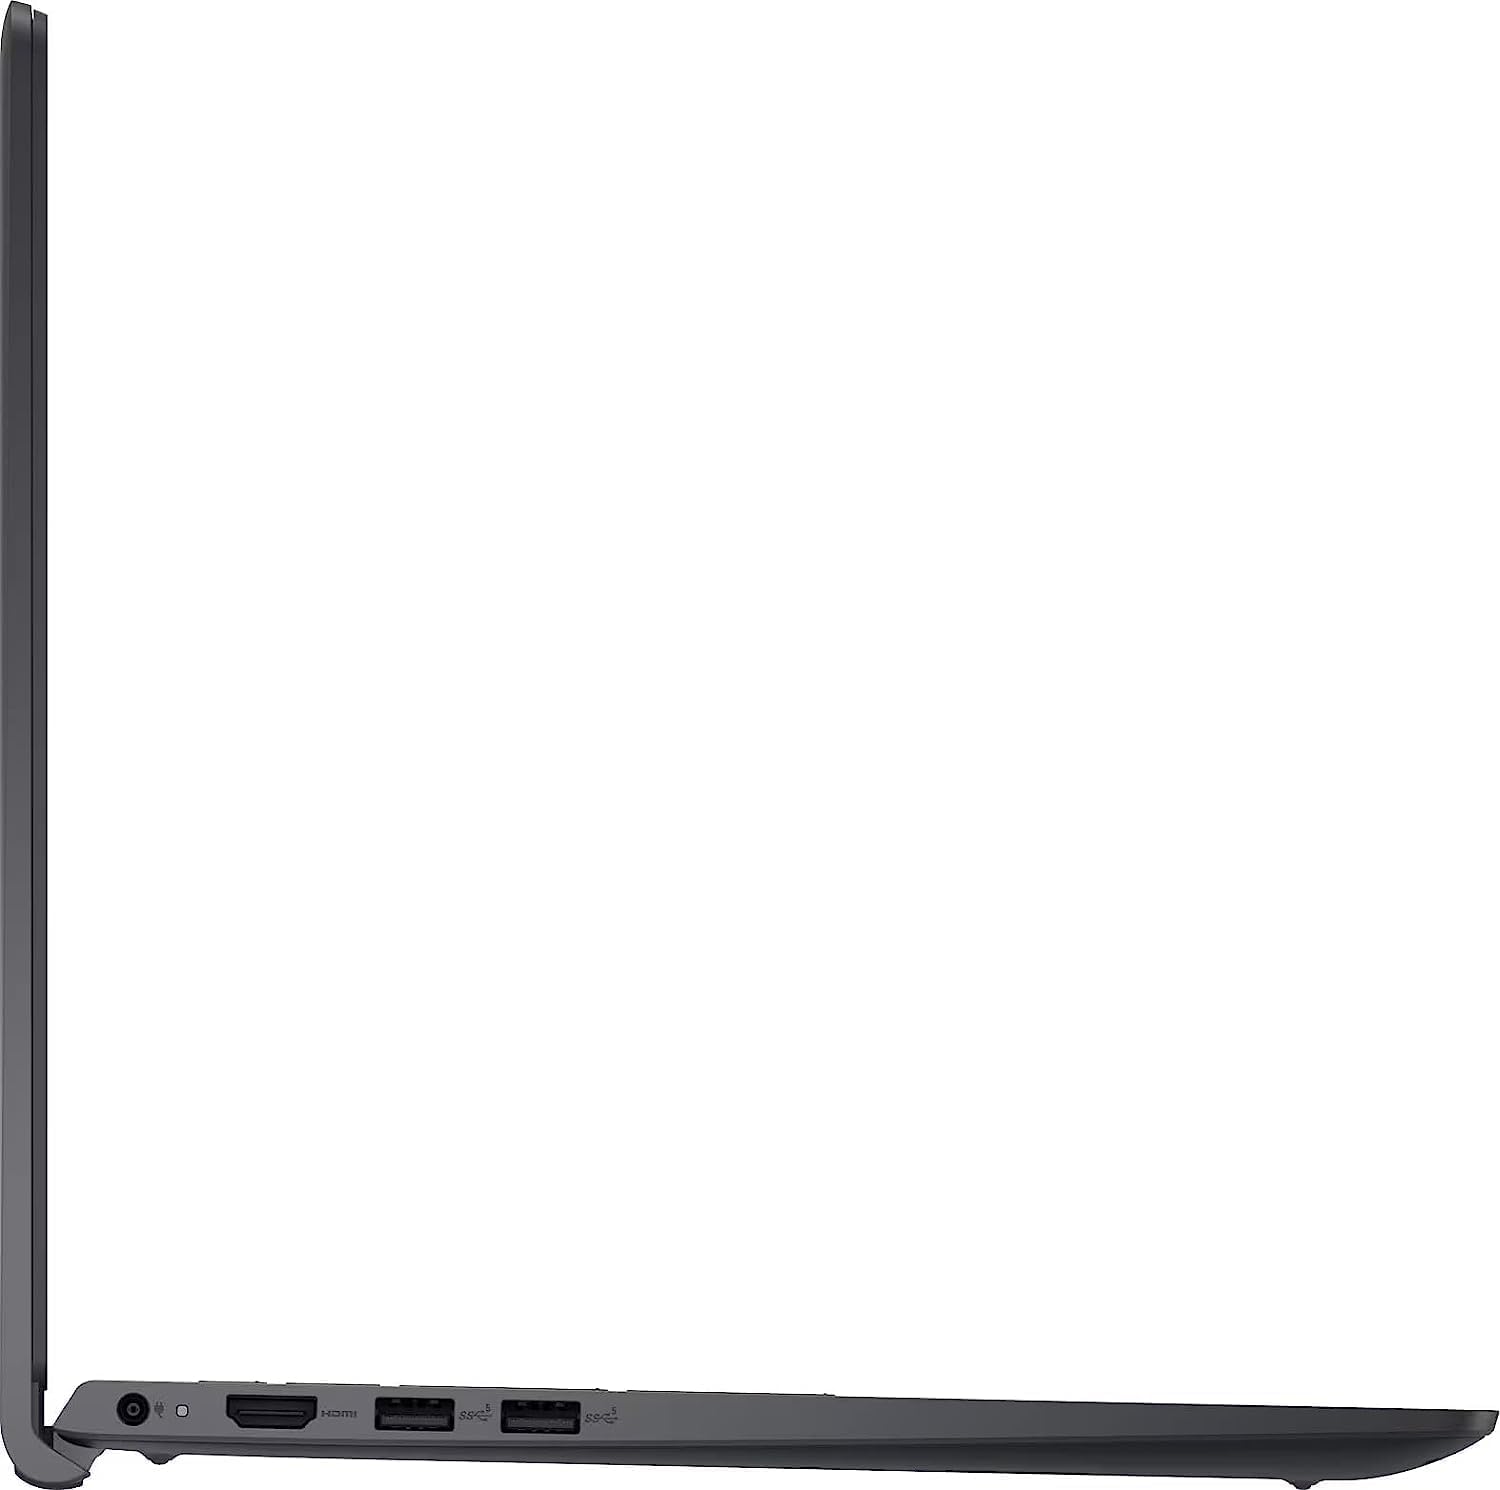 Dell Inspiron 15 3000 3530 Laptop Computer [Windows 11 Pro], 15.6